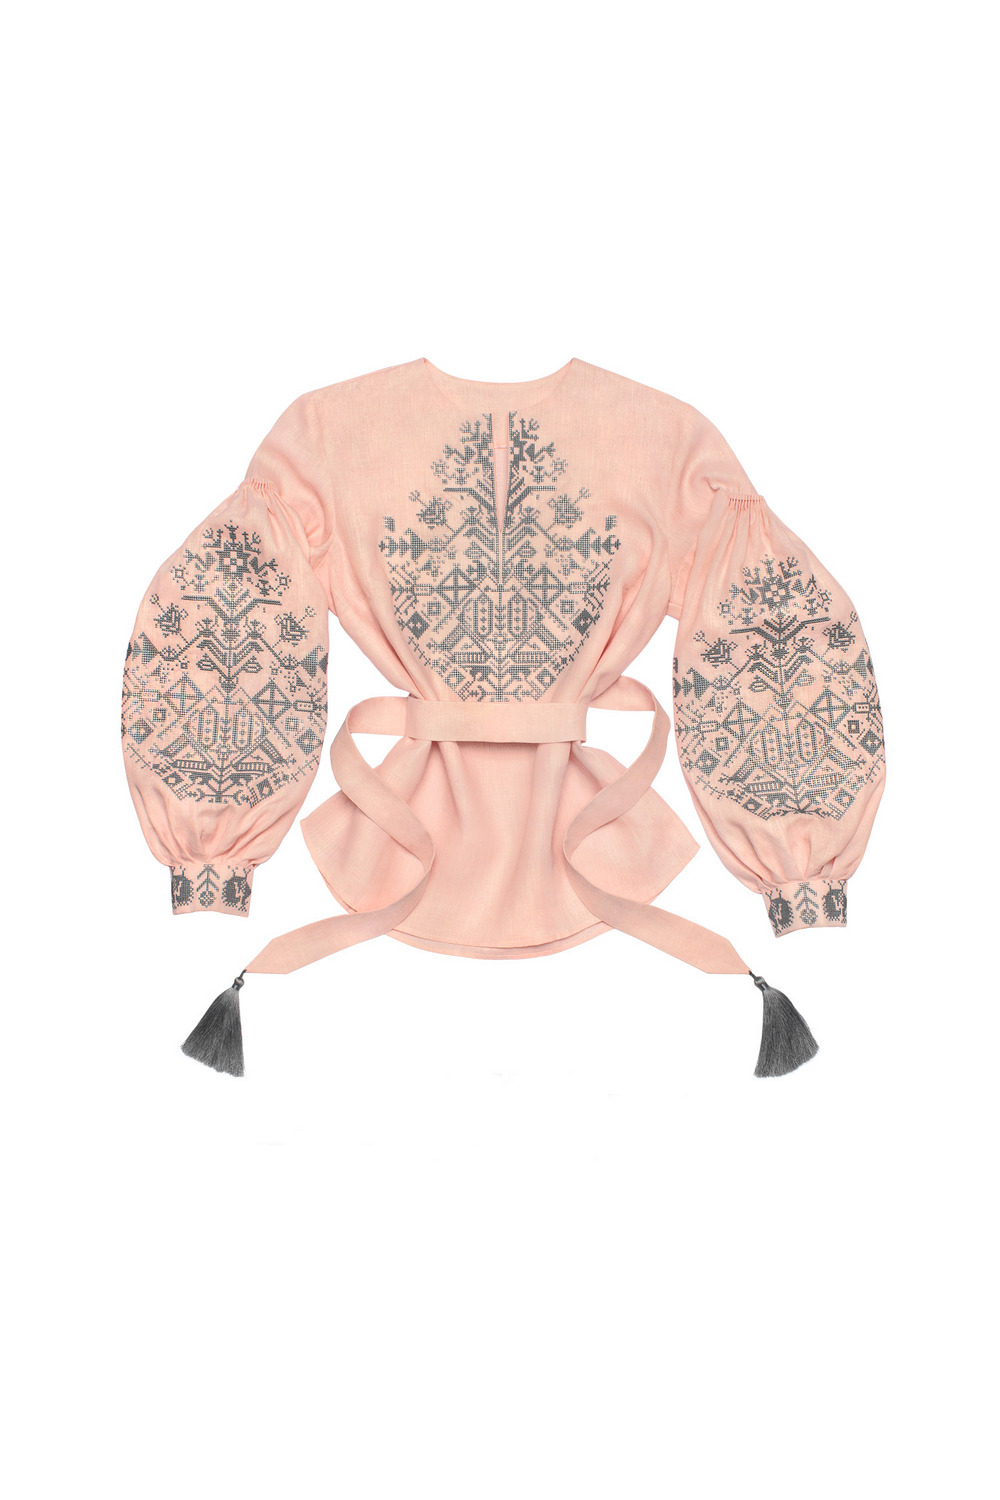 Buy Folk Festival Linen Pink Boho Hippie Comfortable Vyshyvanka blouse, Ukrainian ethnic embroidered clothes